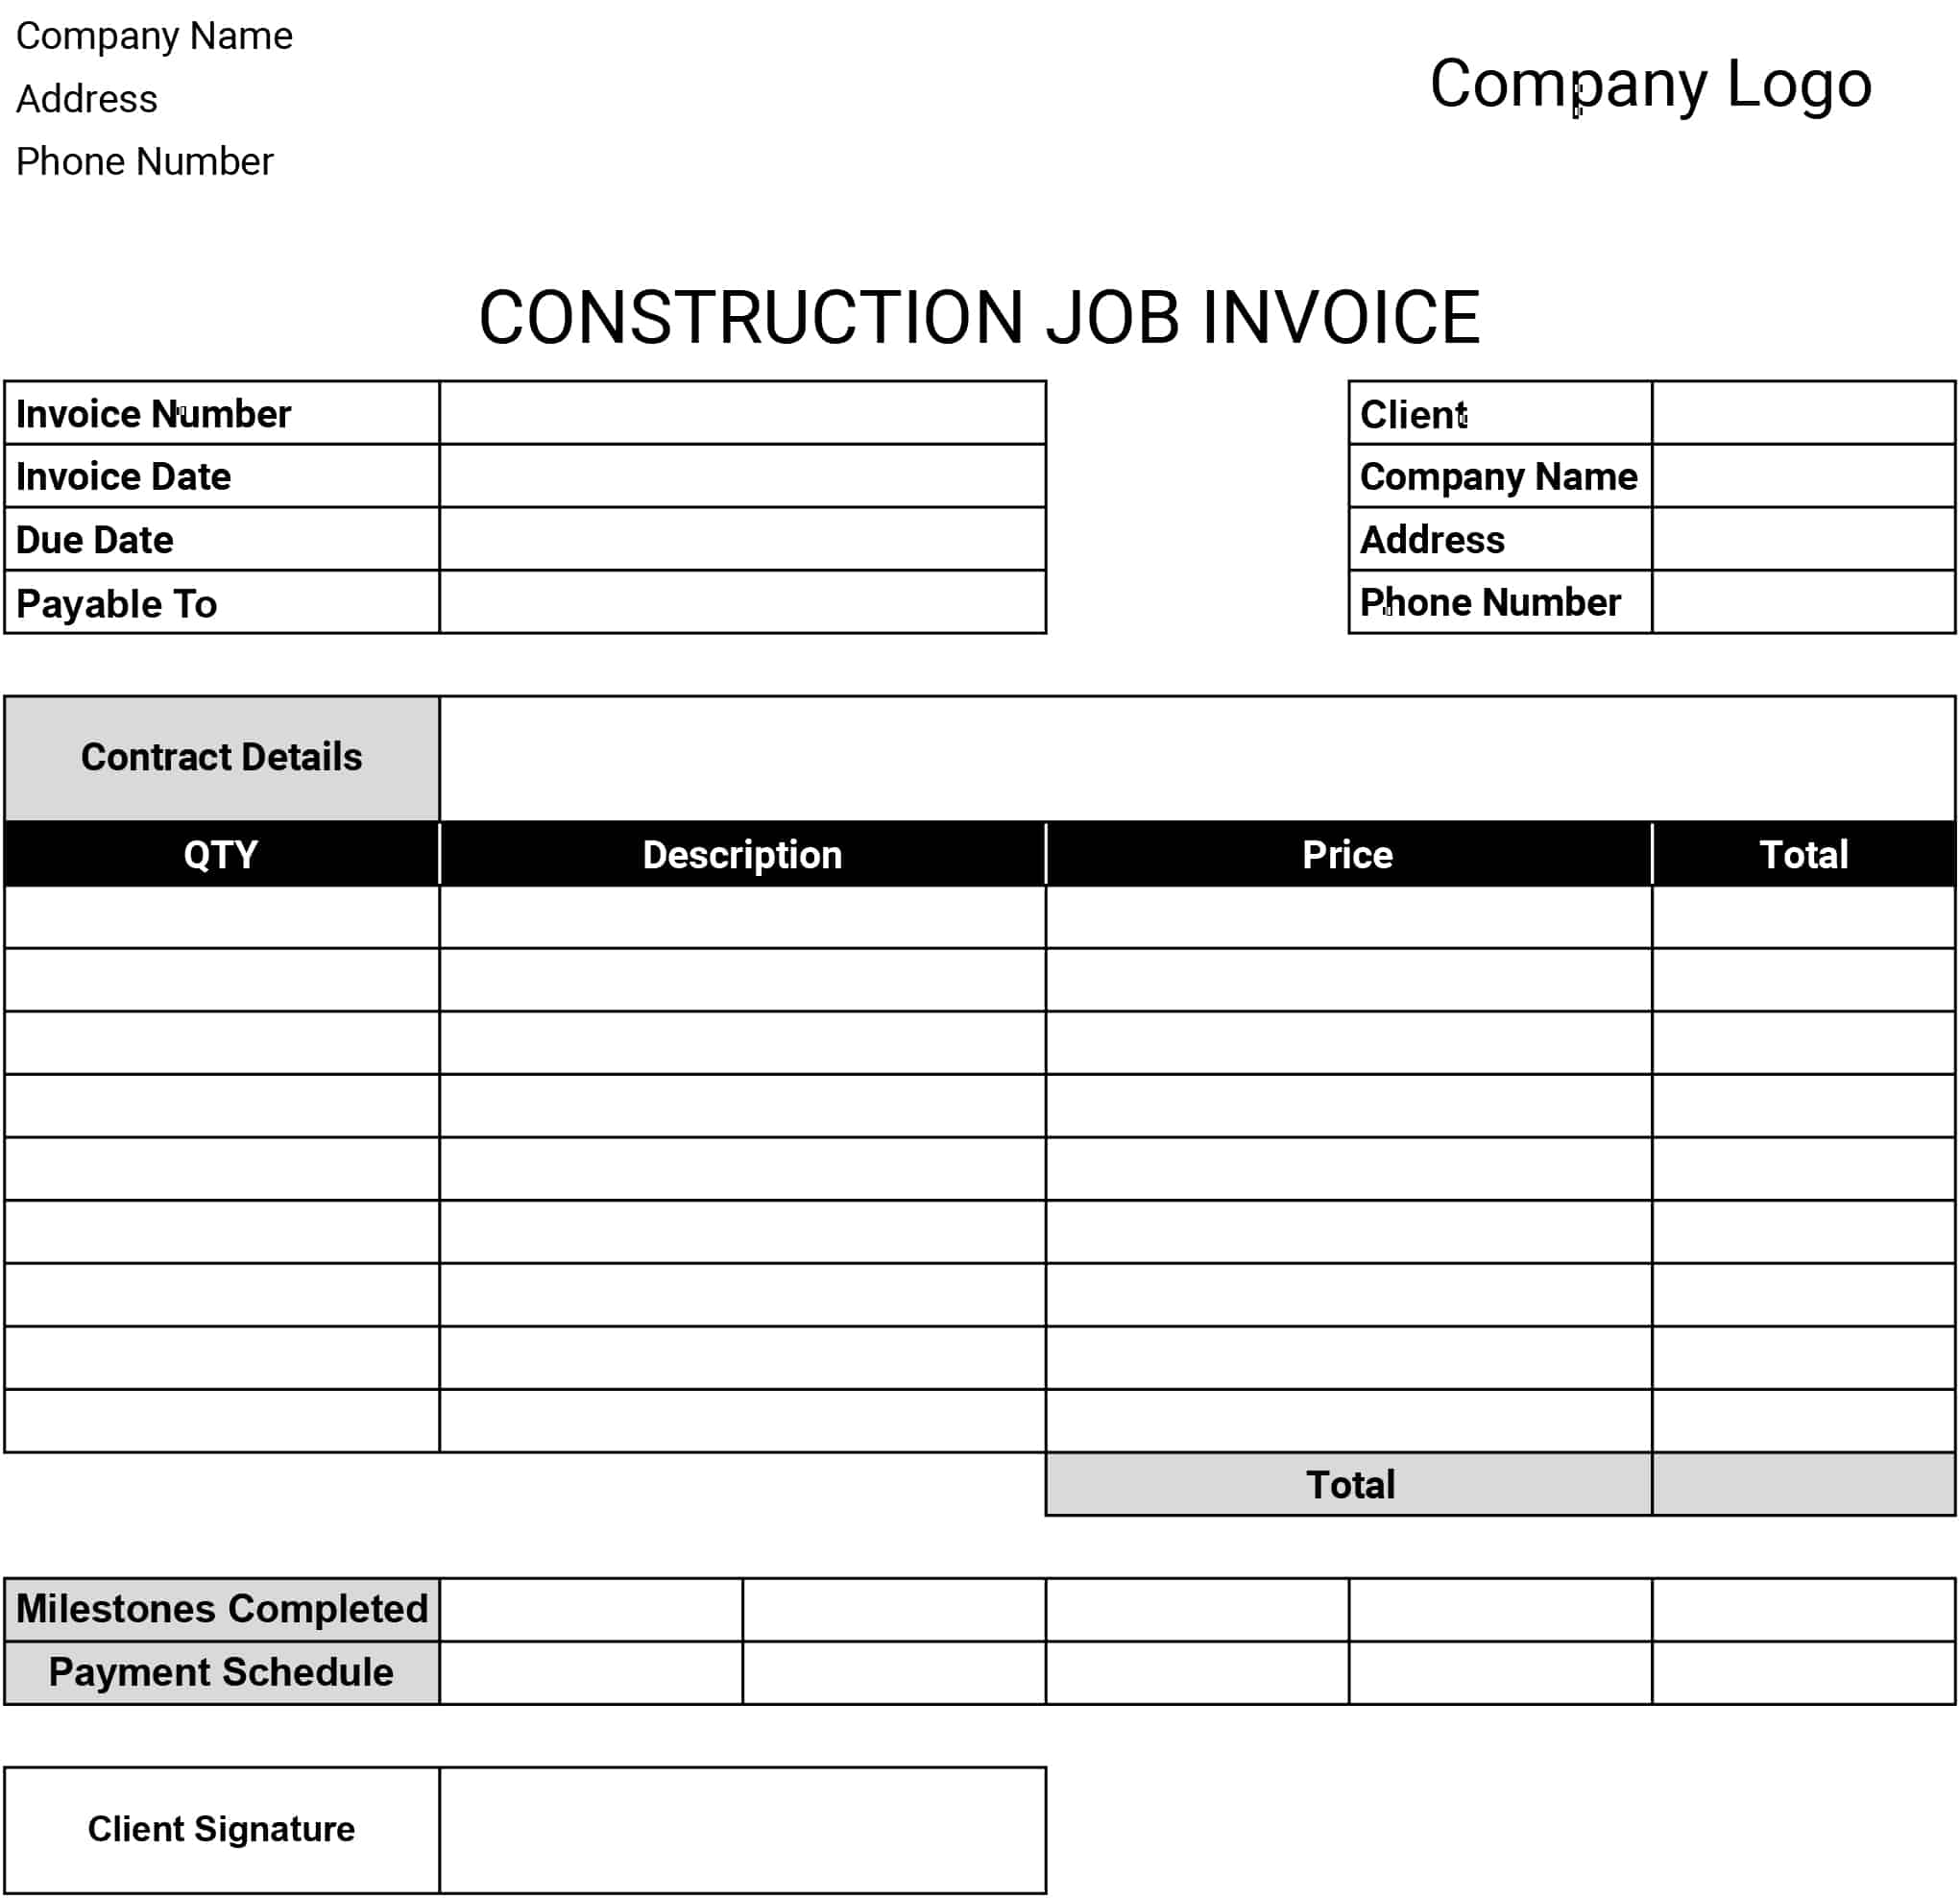 Construction Job Invoice Template